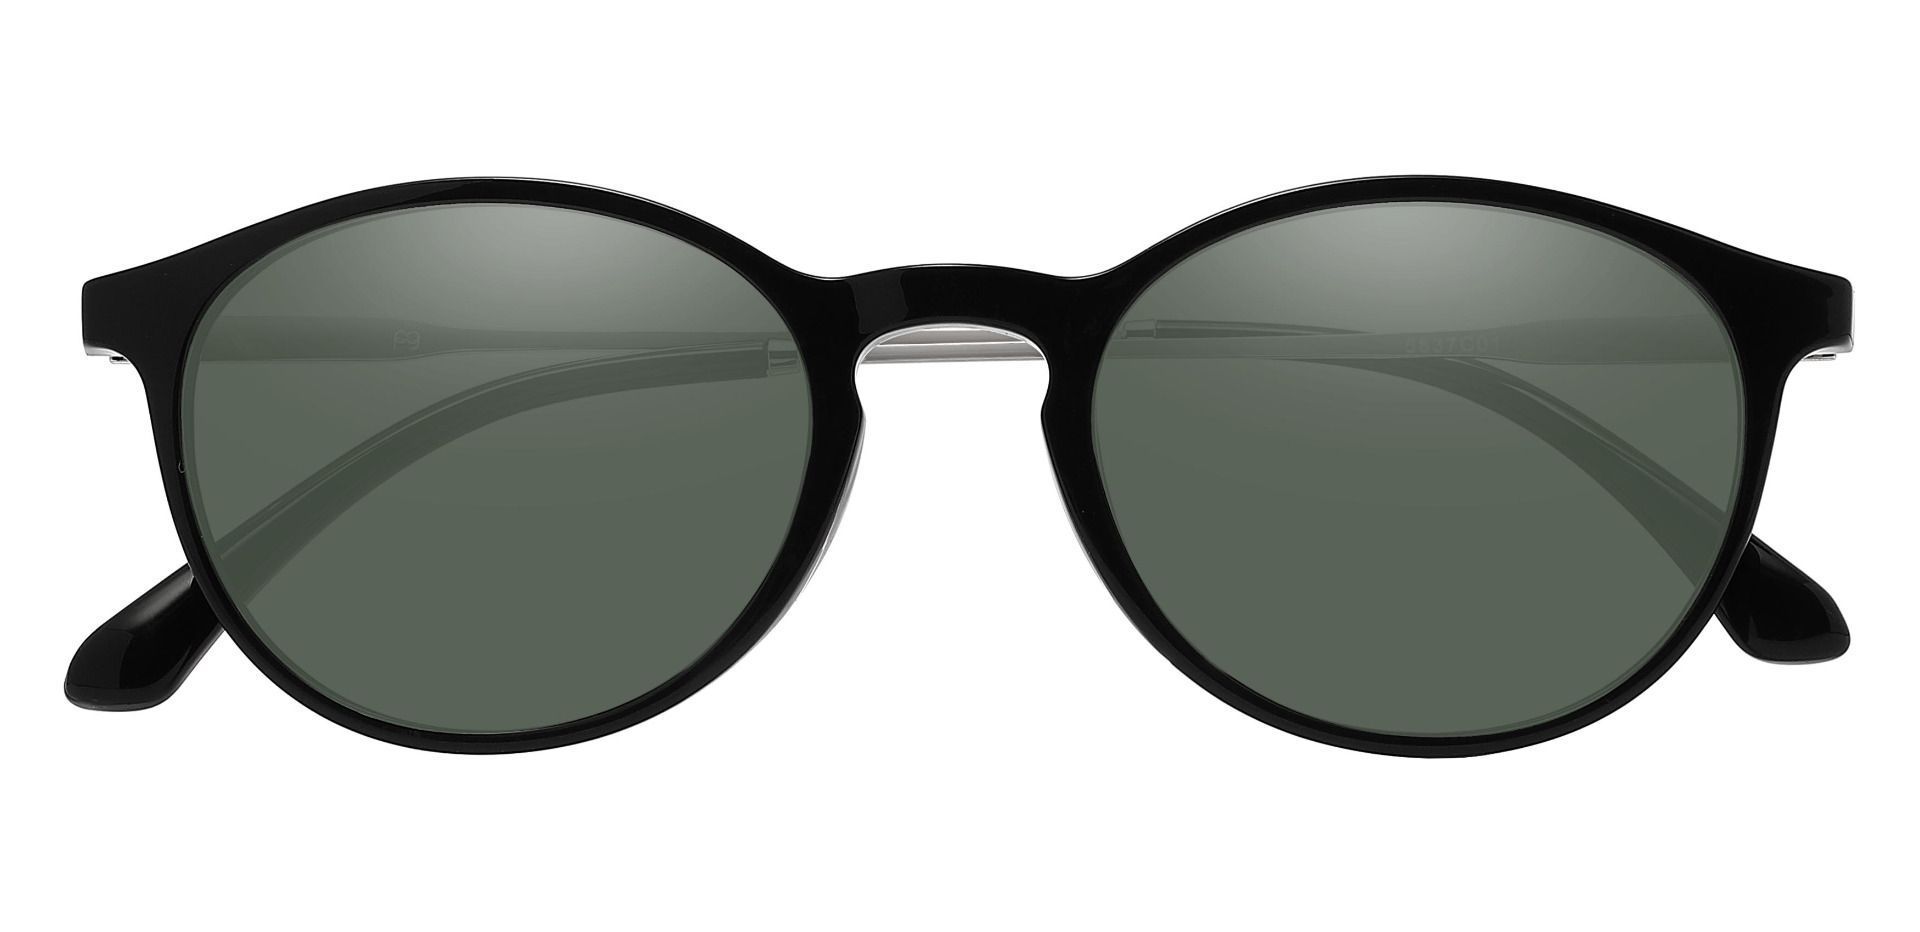 Felton Oval Non-Rx Sunglasses - Black Frame With Green Lenses